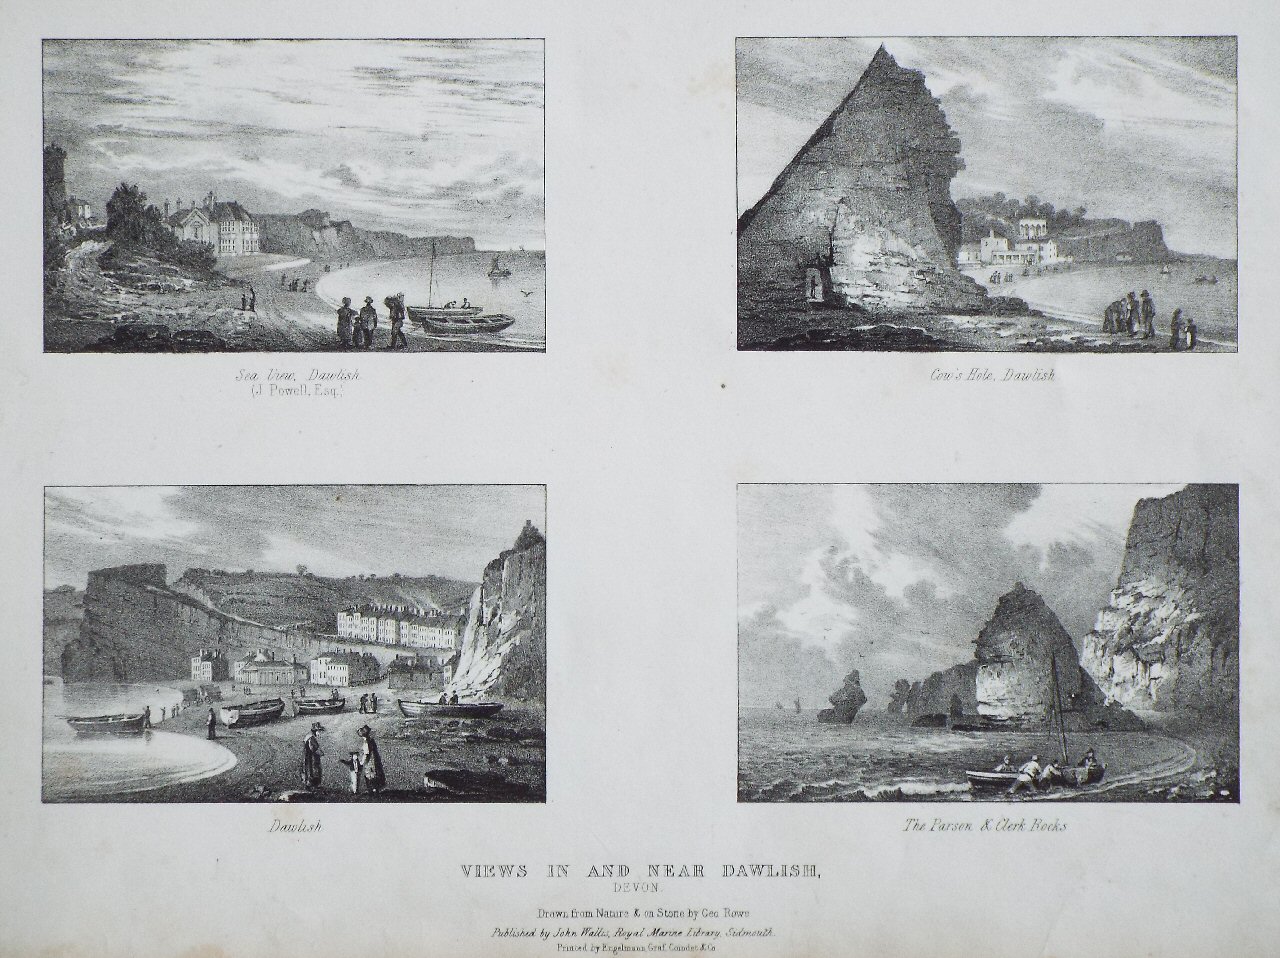 Lithograph - Views in and near Dawlish, Devon. Sea View Dalish (J. Powell Esqr.), Cow's Hole Dawlish, Dawlish, The Parson & Clerk Rocks - Rowe